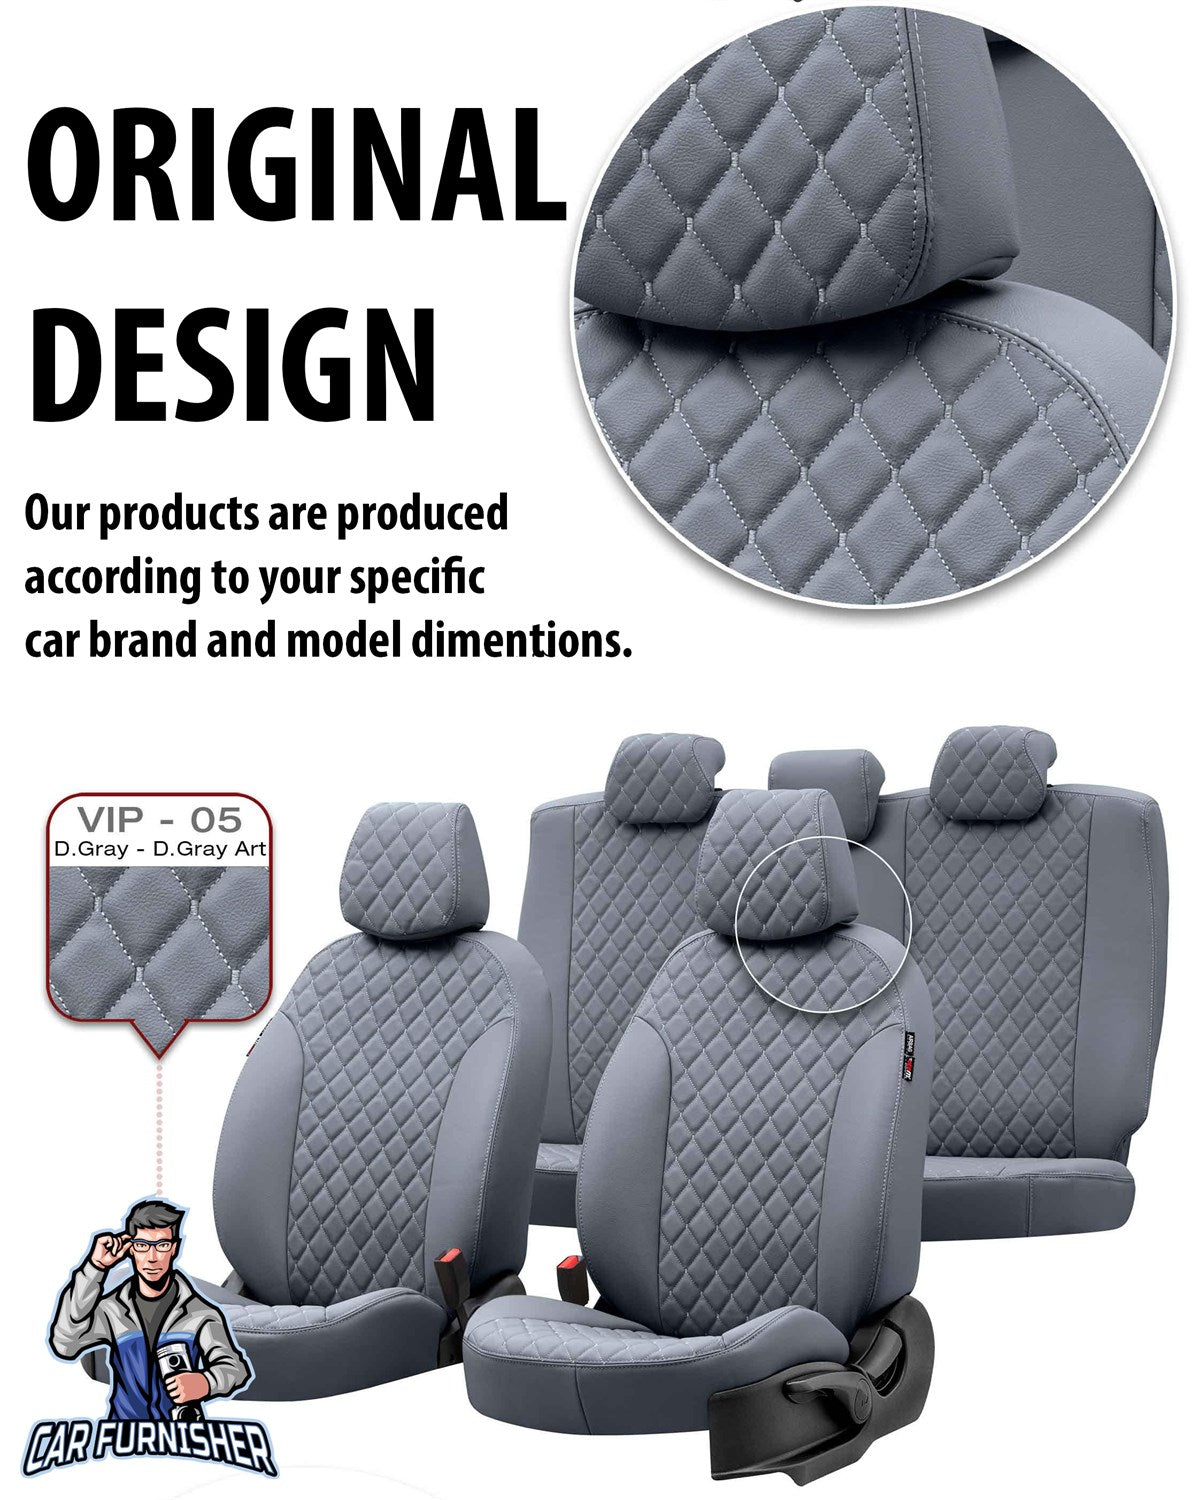 Kia Sorento Seat Covers Madrid Leather Design Red Leather